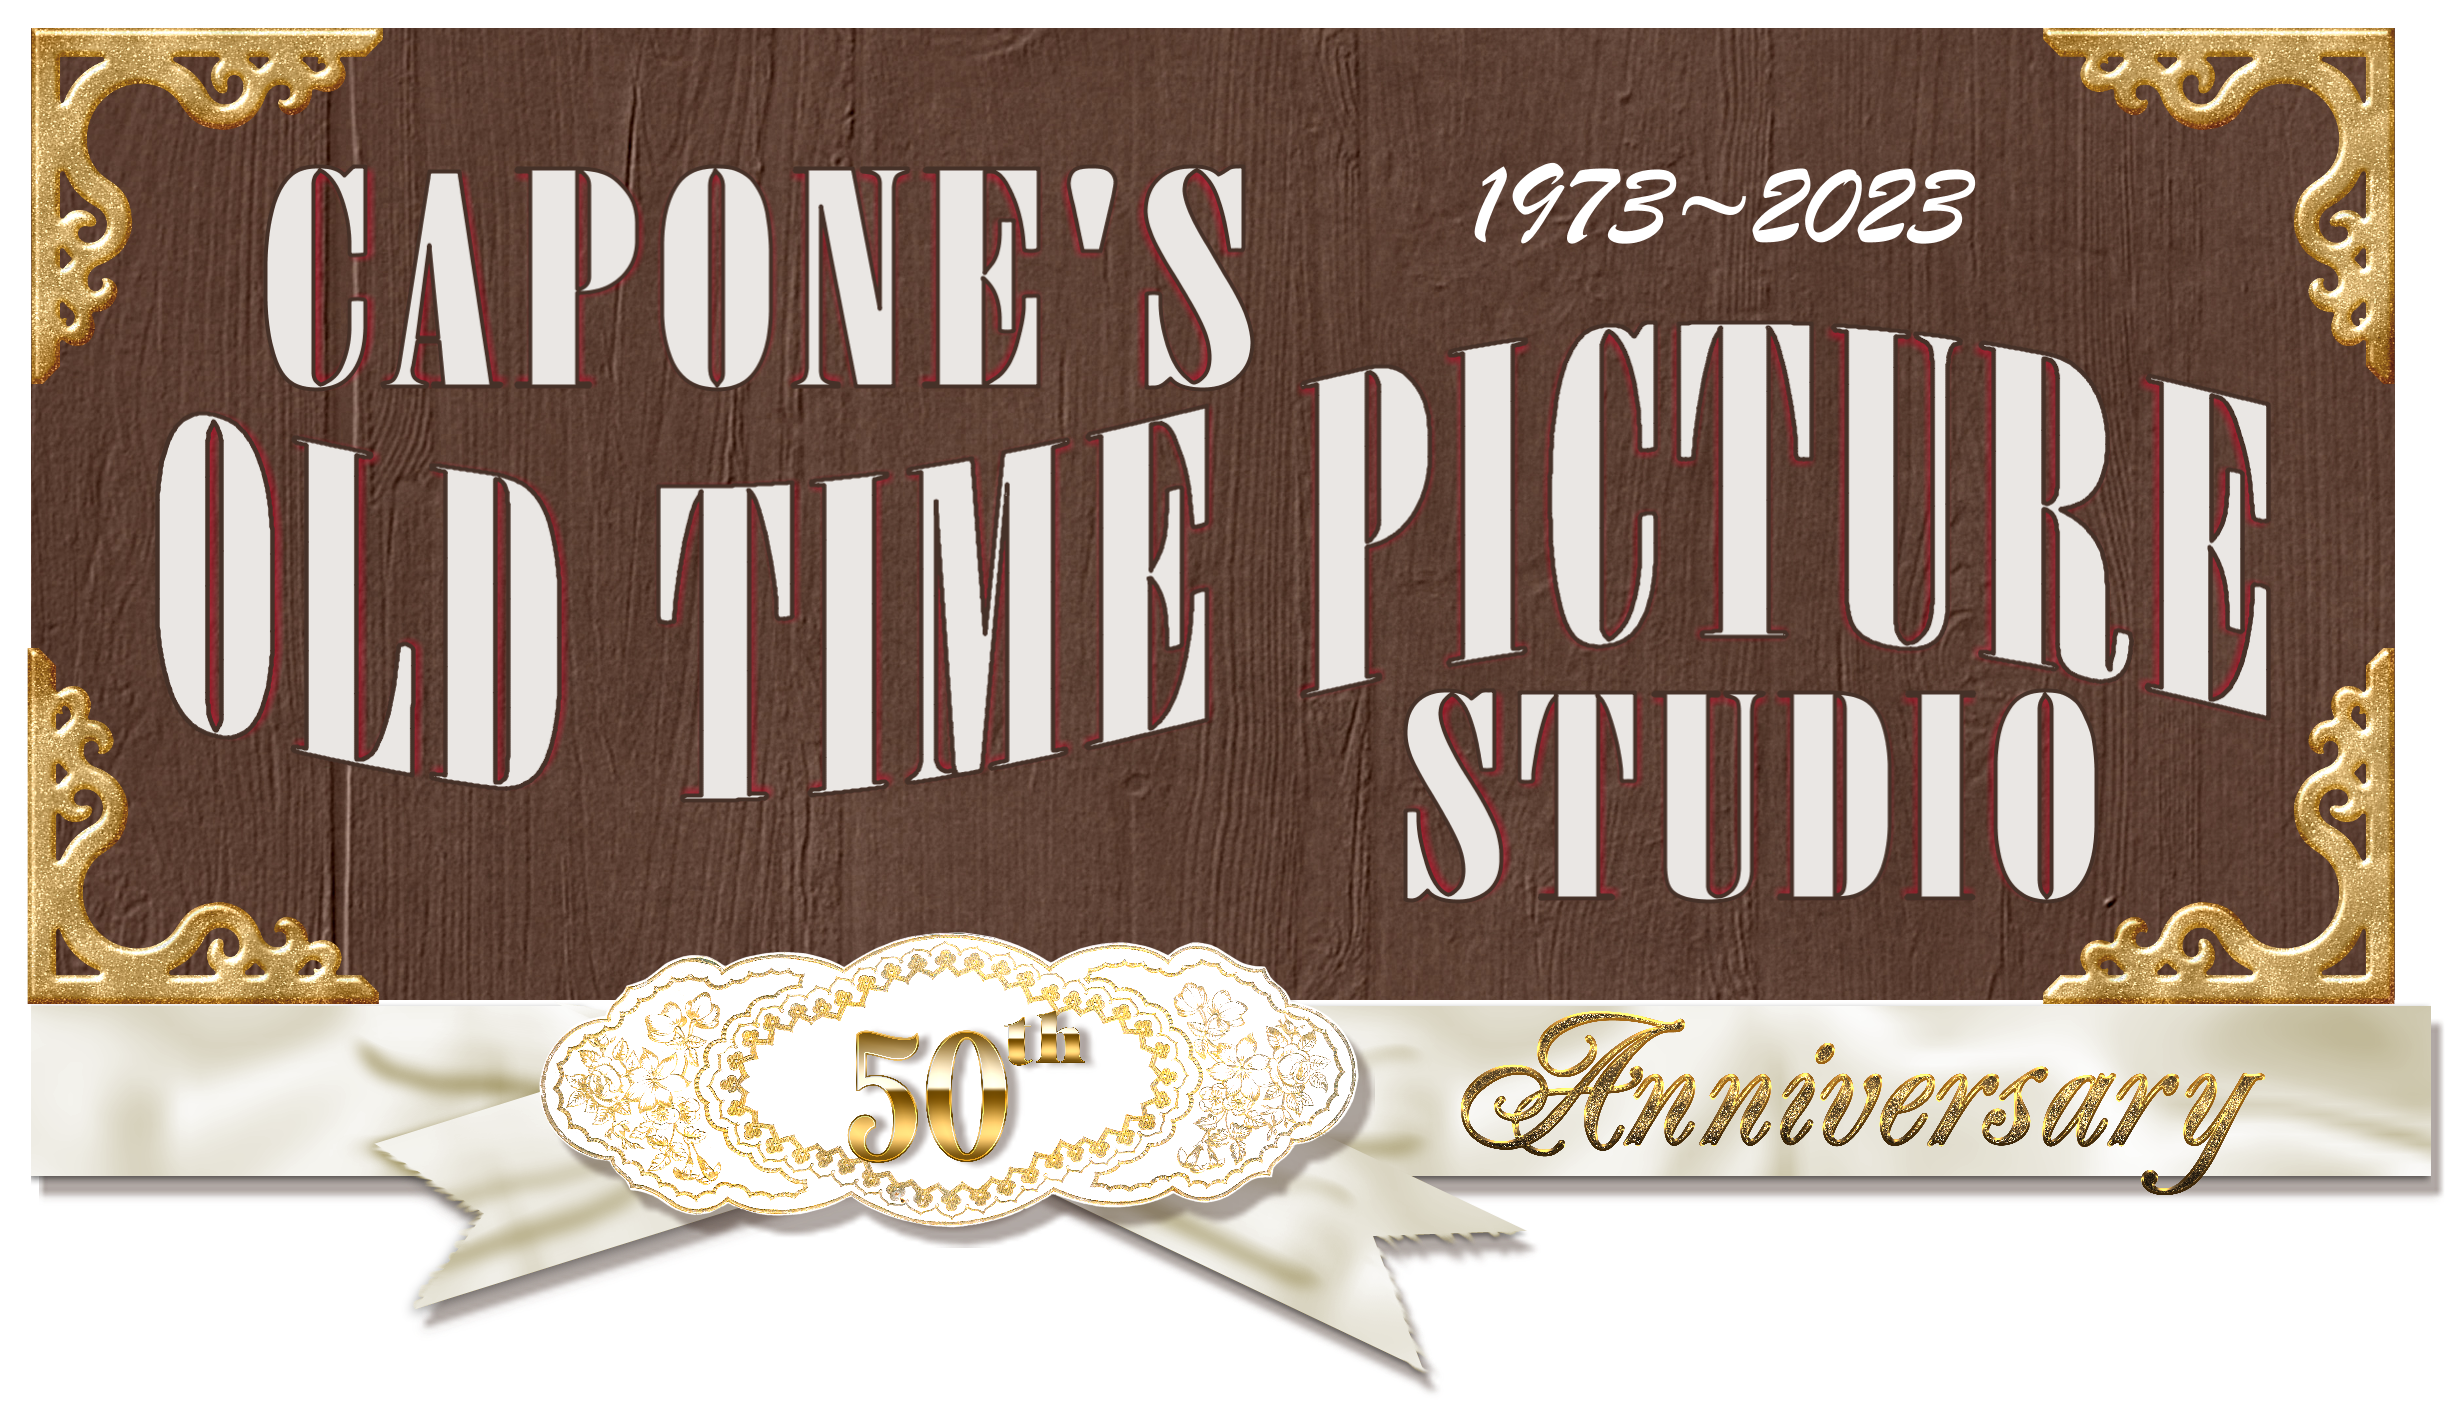 Capone's Old Time Picture Studio